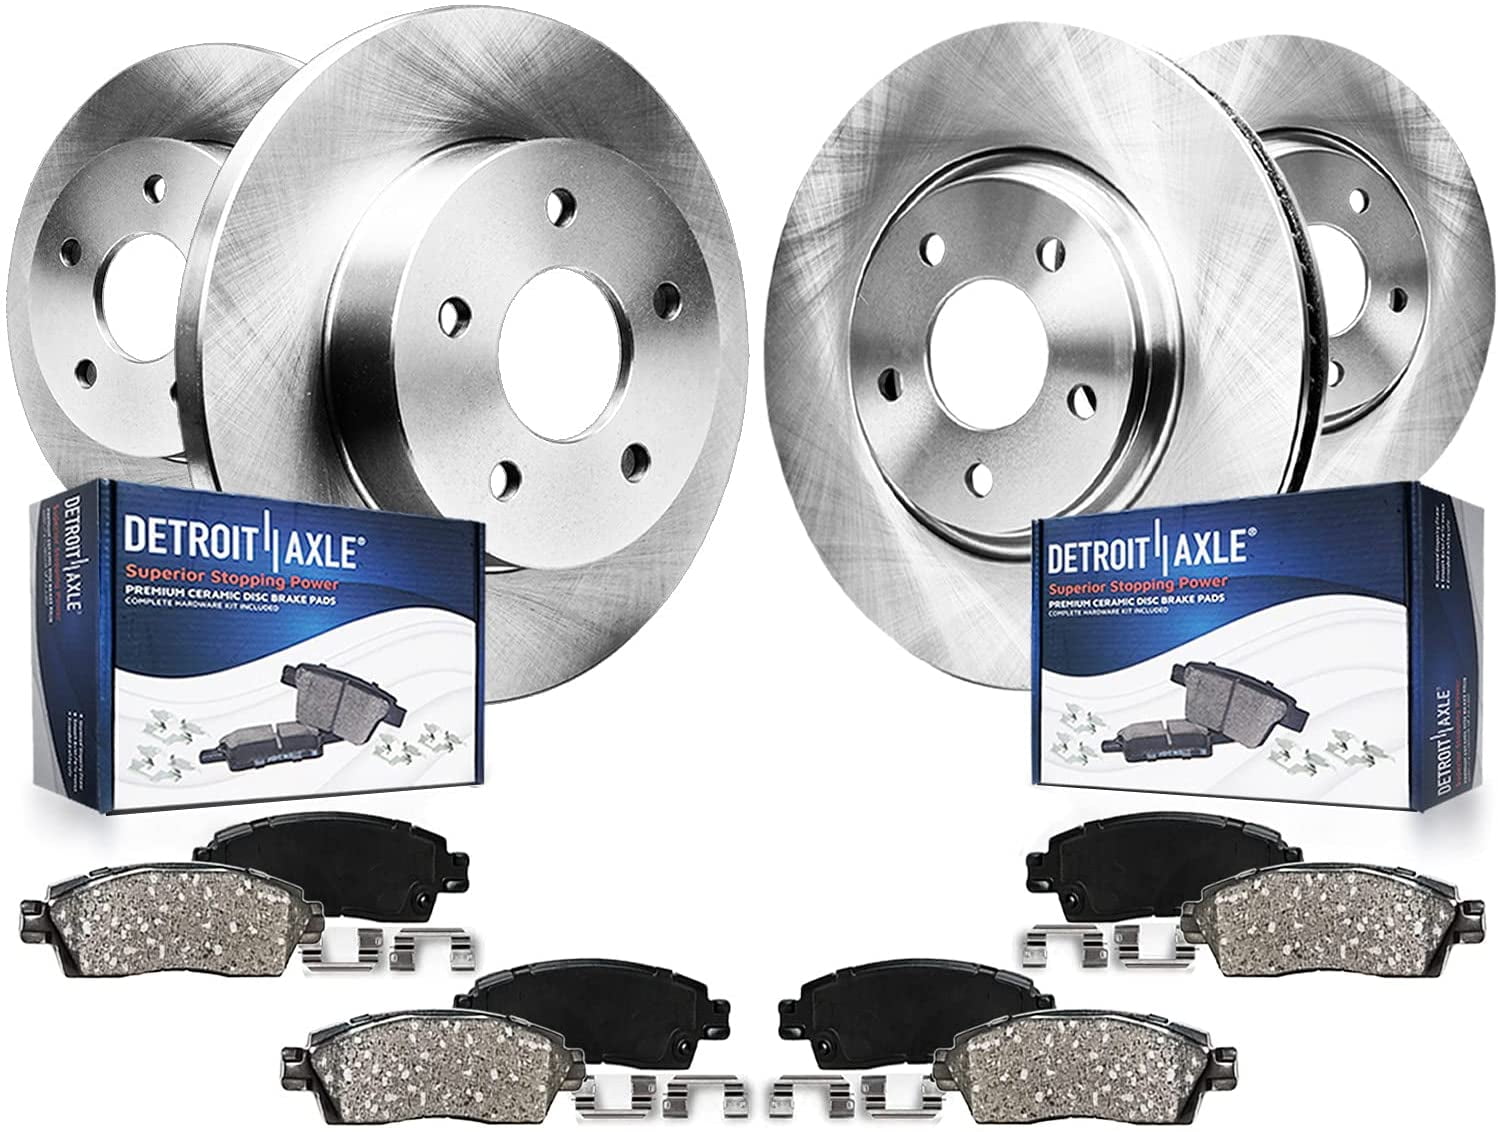 Detroit Axle - Rear Brake Kit for Nissan Altima Maxima Sentra Juke  Replacement Disc Brake Rotors and Ceramic Brakes Pads : 11.46